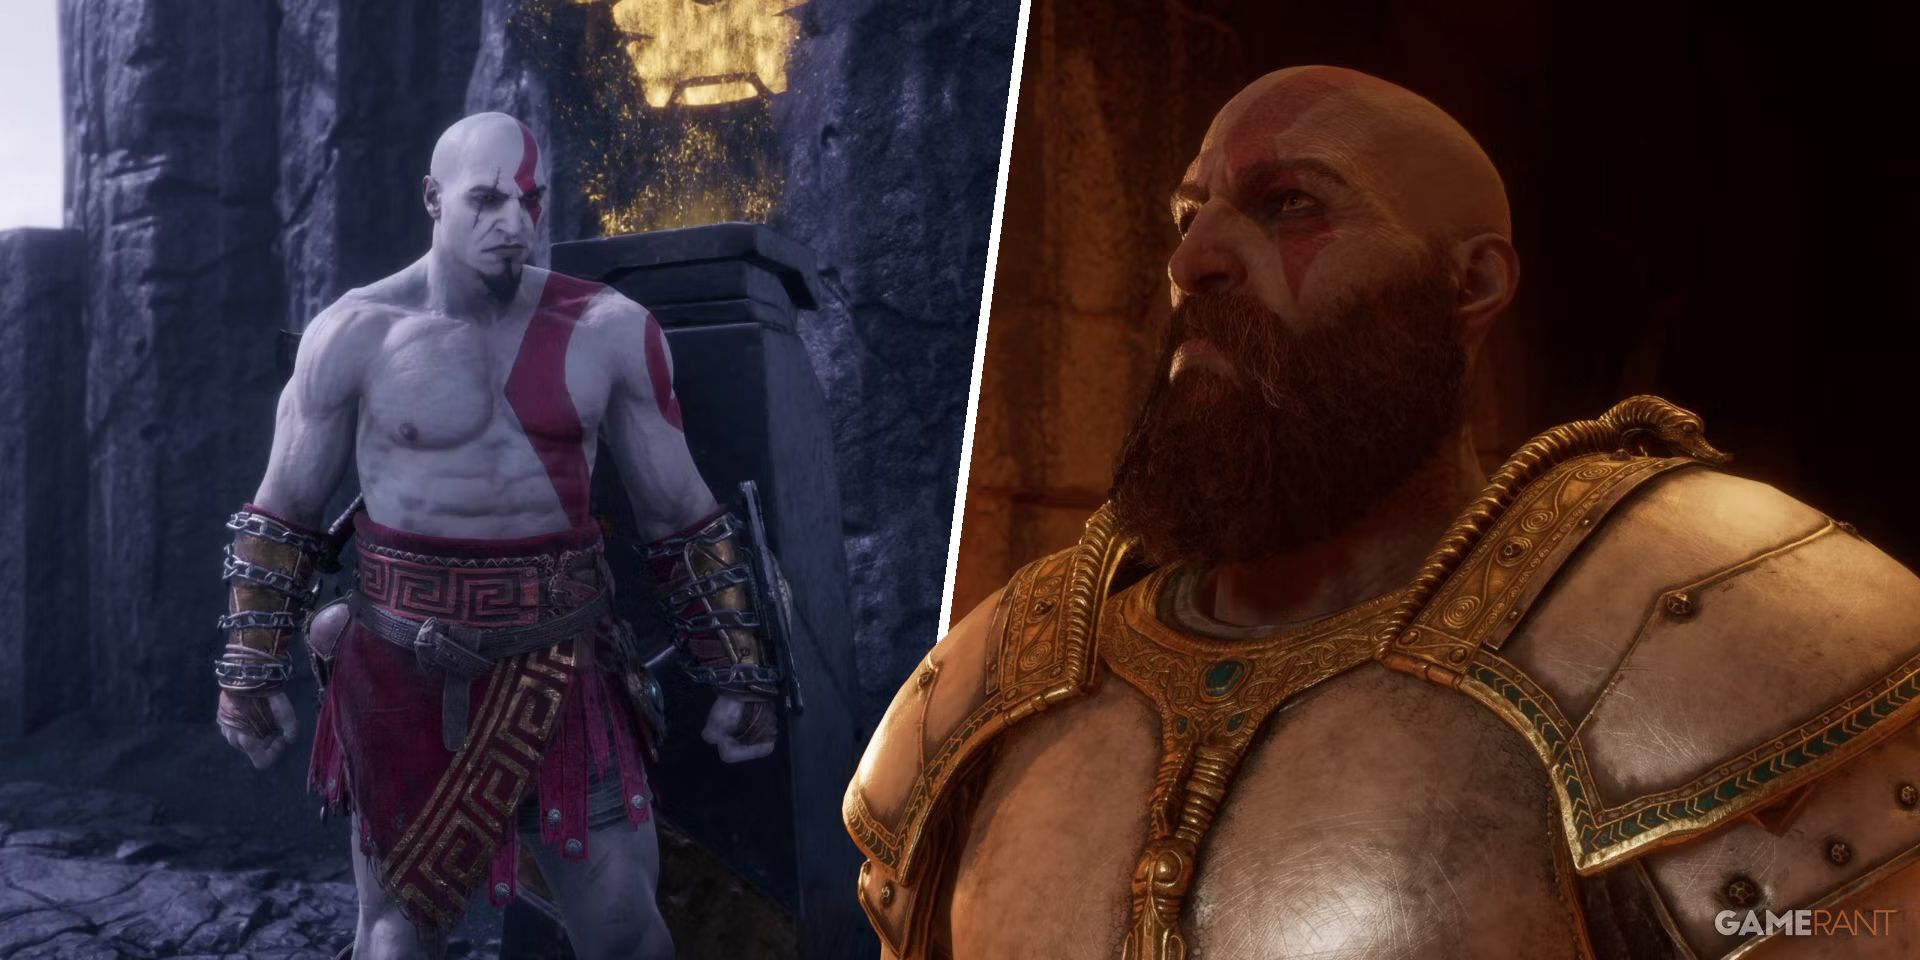 Is God of War Ragnarok on PS4? - Answered - Prima Games